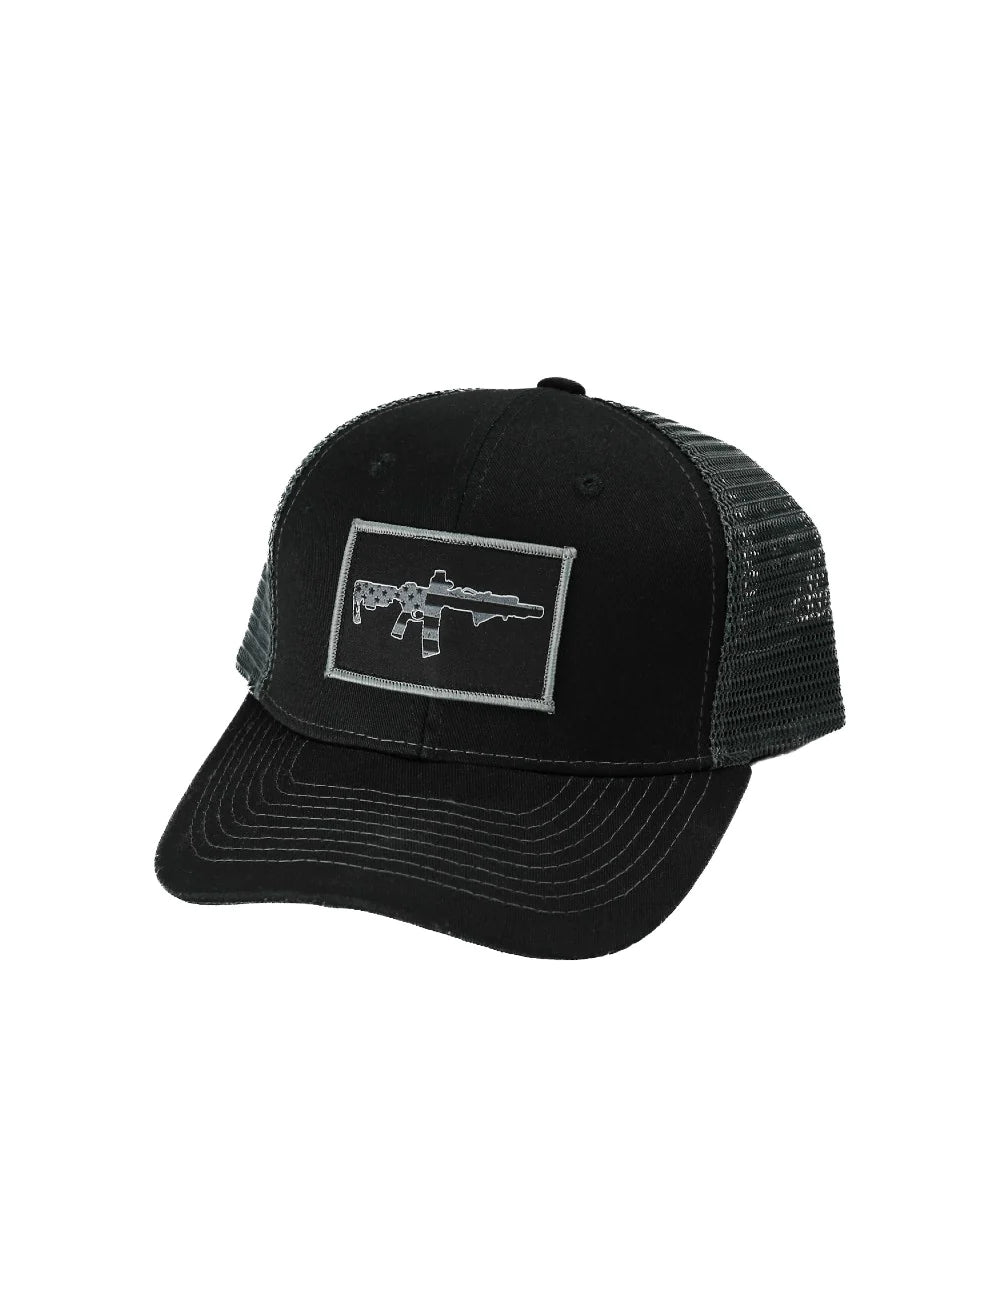 AR Flag Hat - Gray/Black